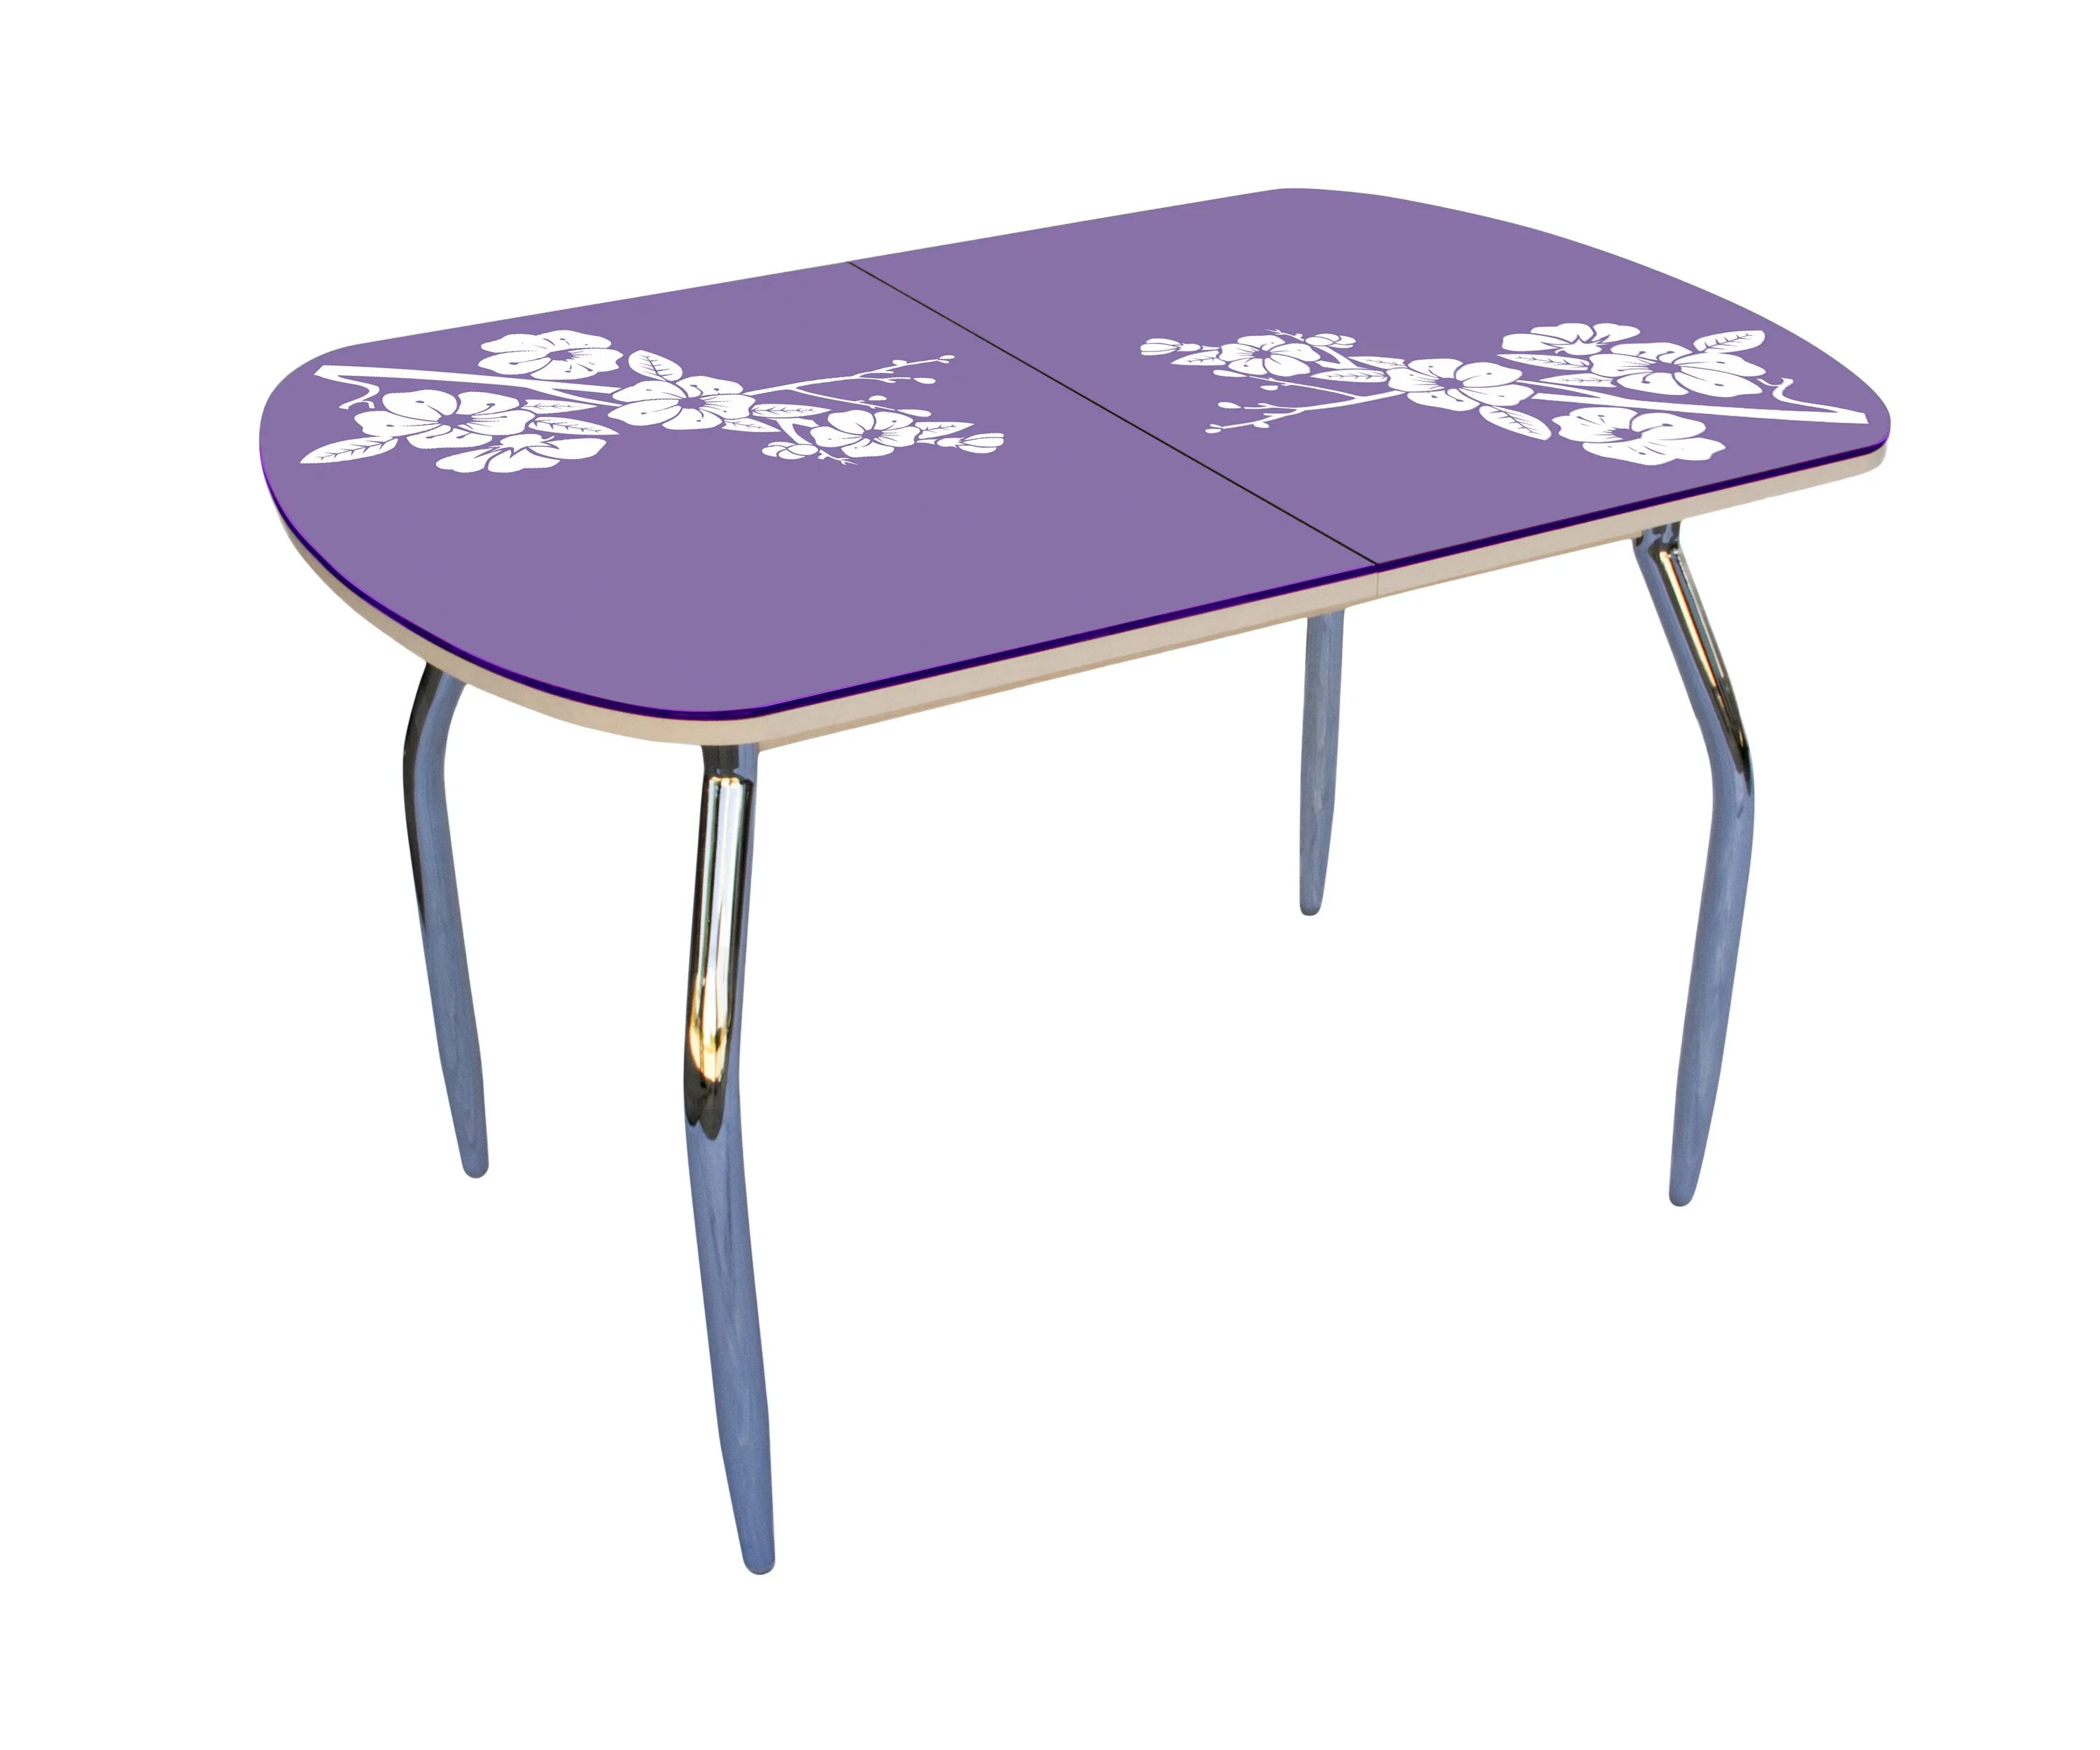 Стол кухонный ru. Стол кухонный фиолетовый. Кухонный стол сиреневый. Стол стеклянный кухонный фиолетовый. Фиолетовый стол для кухни.